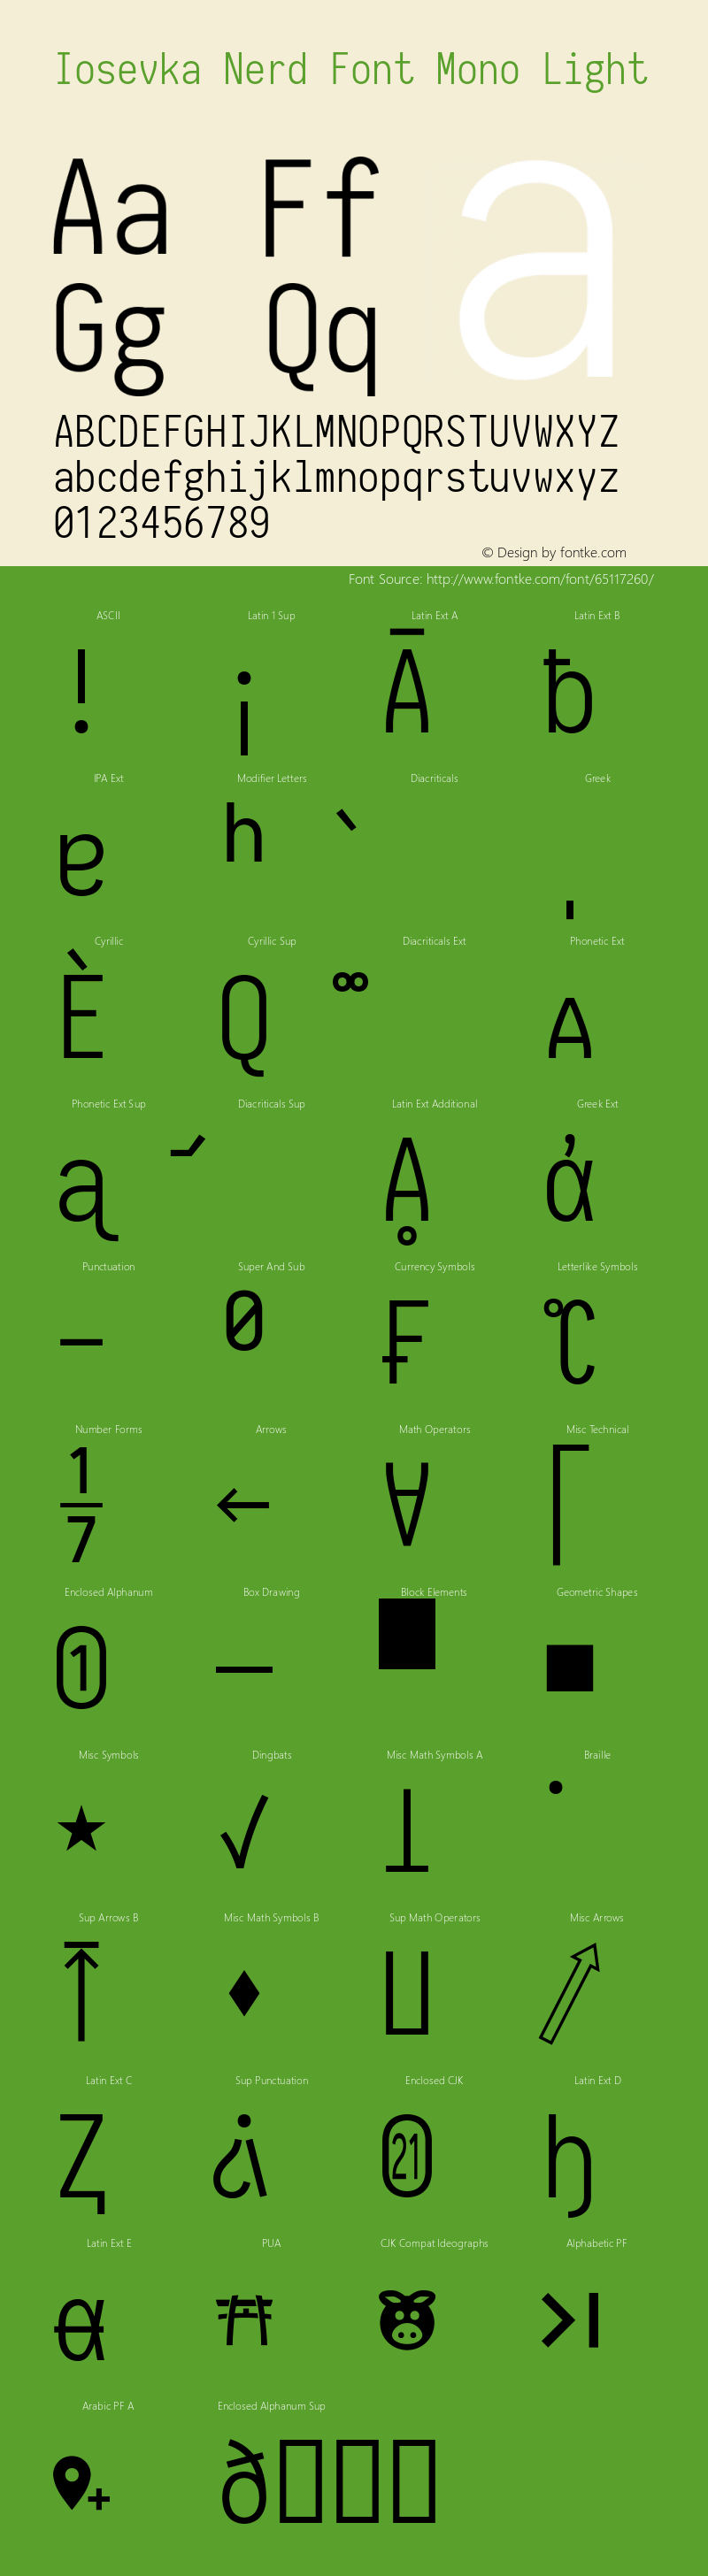 Iosevka Term Light Nerd Font Complete Mono 2.1.0; ttfautohint (v1.8.2)图片样张